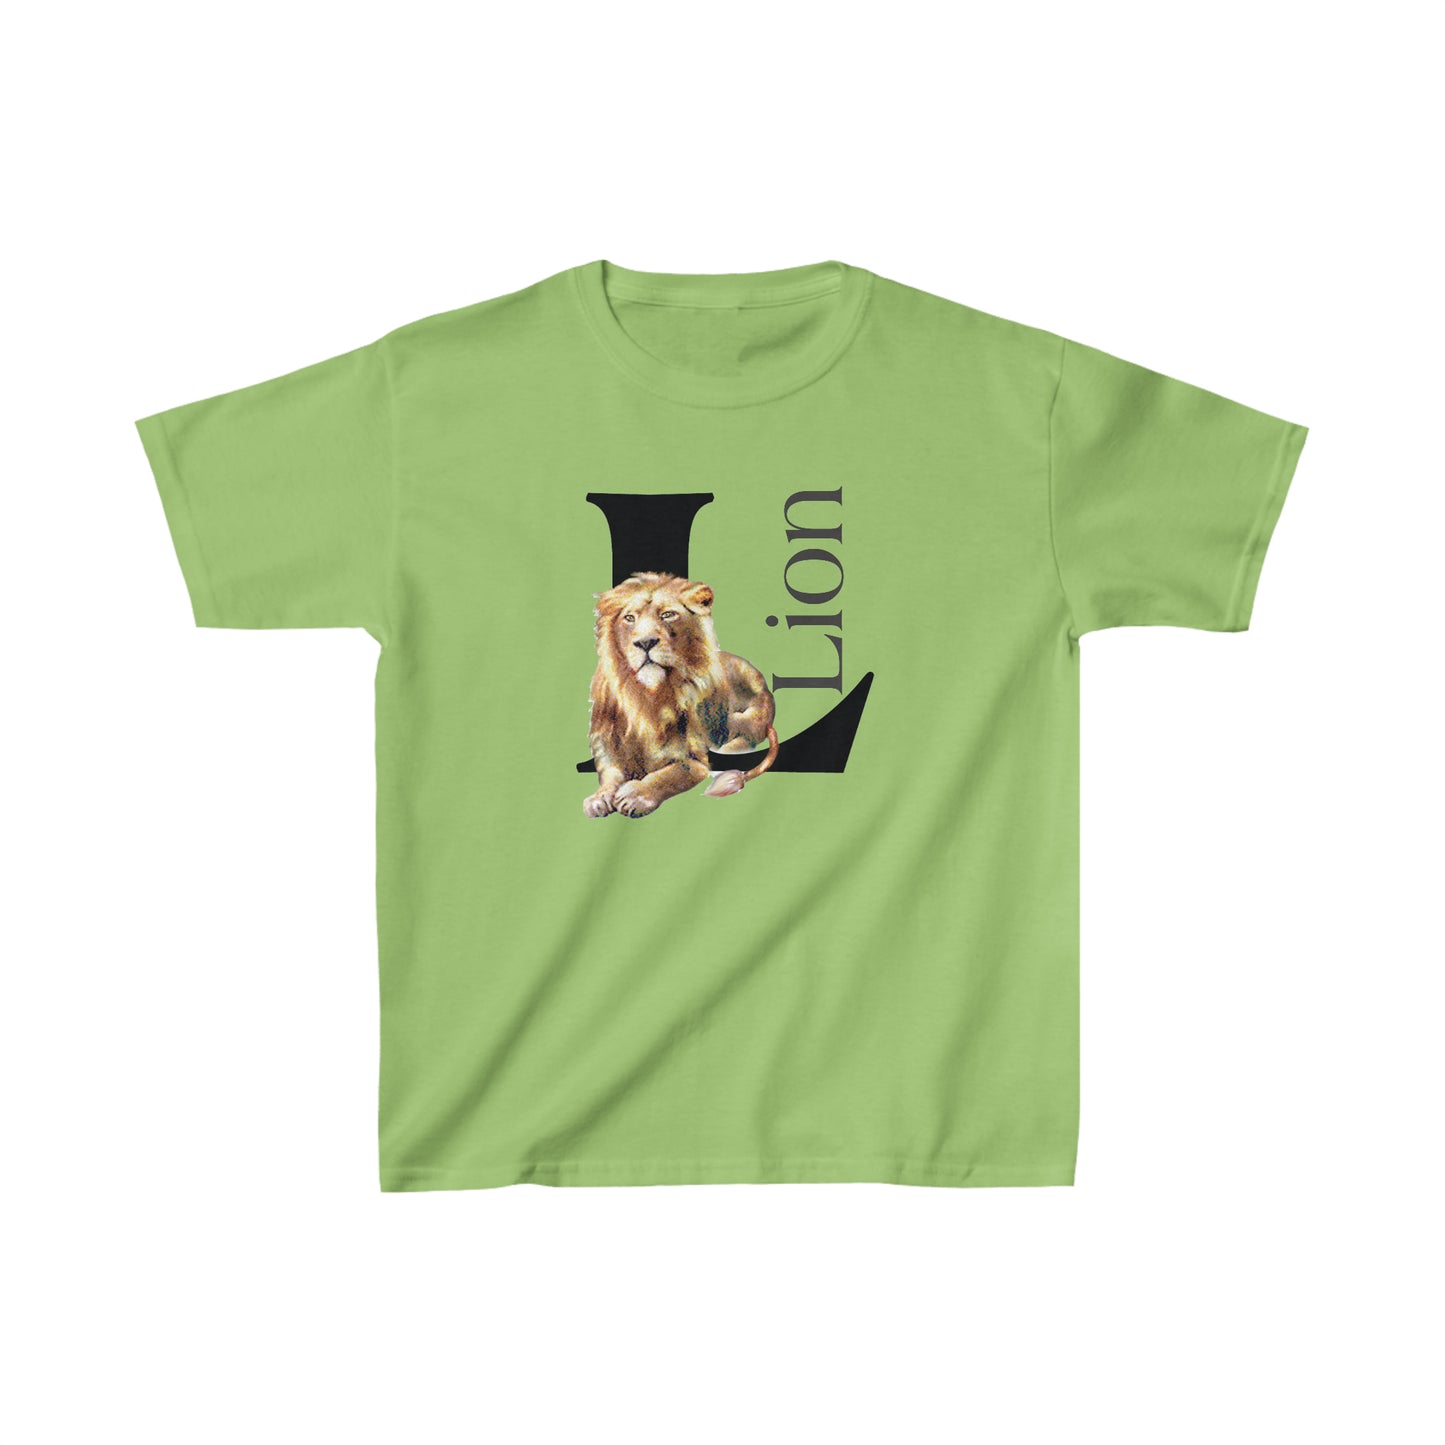 L is for Lion T-Shirt, Lion Drawing T-Shirt, Illustration of Lion, Proud Lion animal t-shirt, animal alphabet T, animal letters Tee